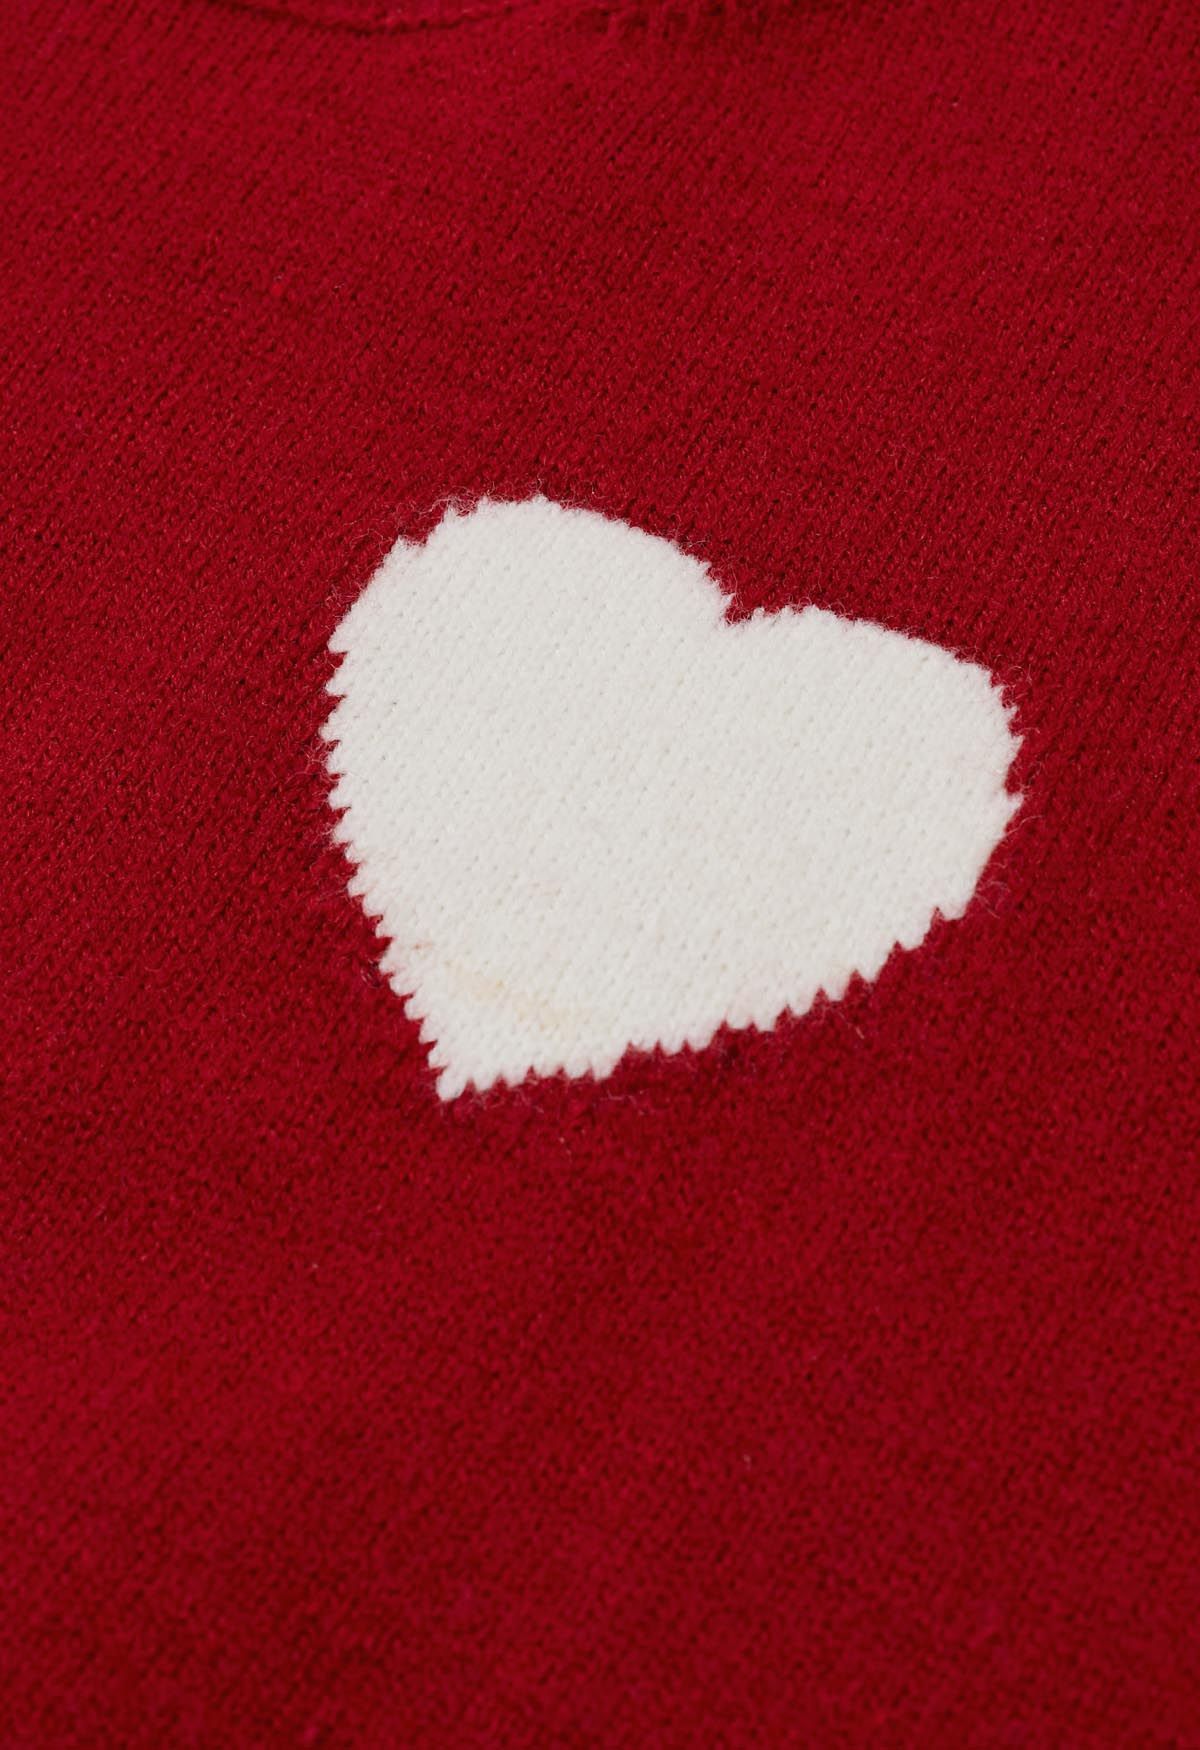 Suéter de punto acogedor Sweet Heart en rojo